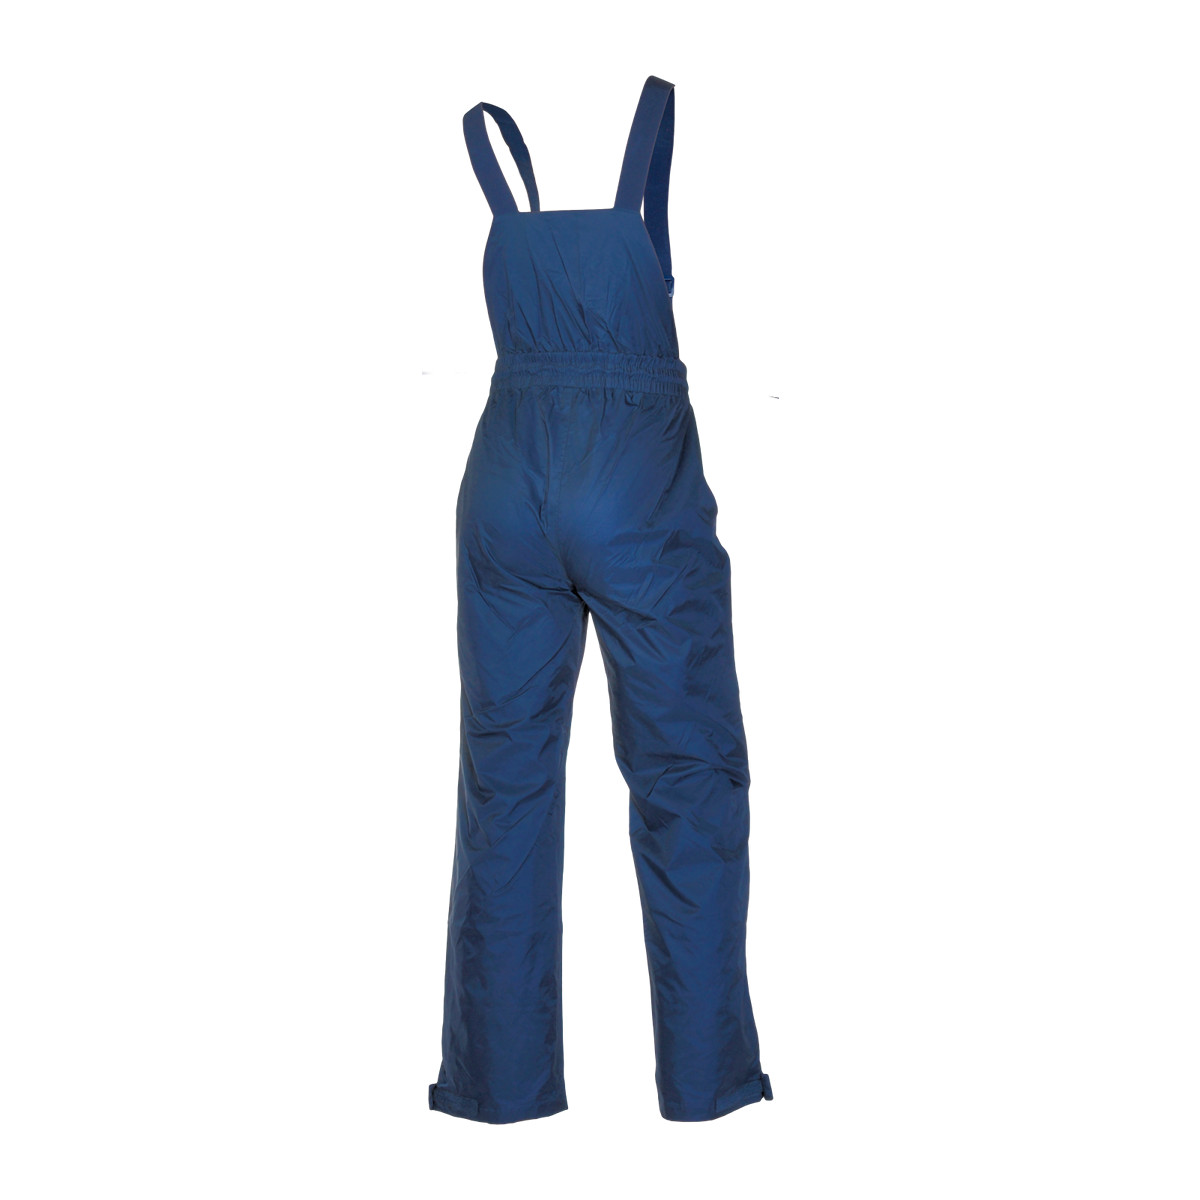 Dry Fashion Baltic Crew pantalon de voile unisexe bleu marine, taille XL